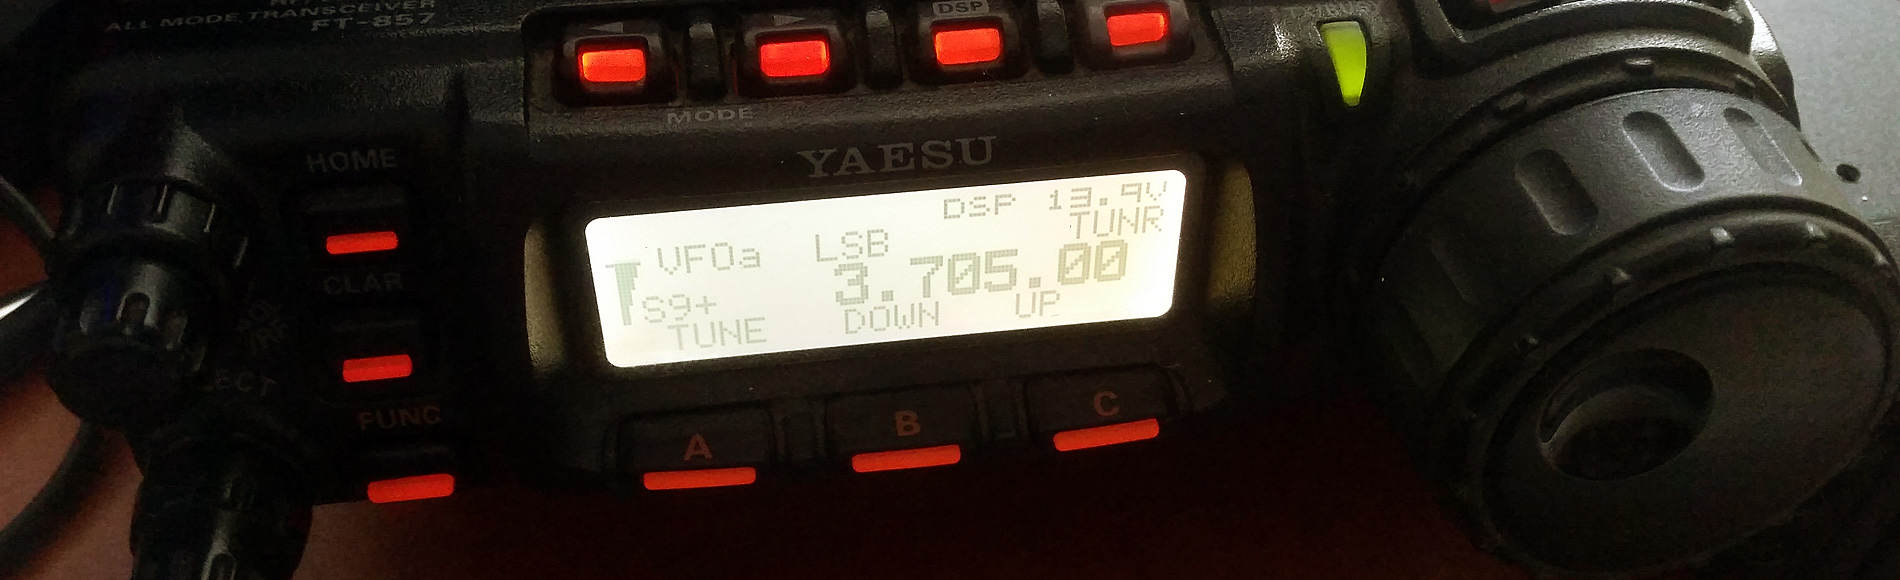 Benzi și frecvențe HAM Radio